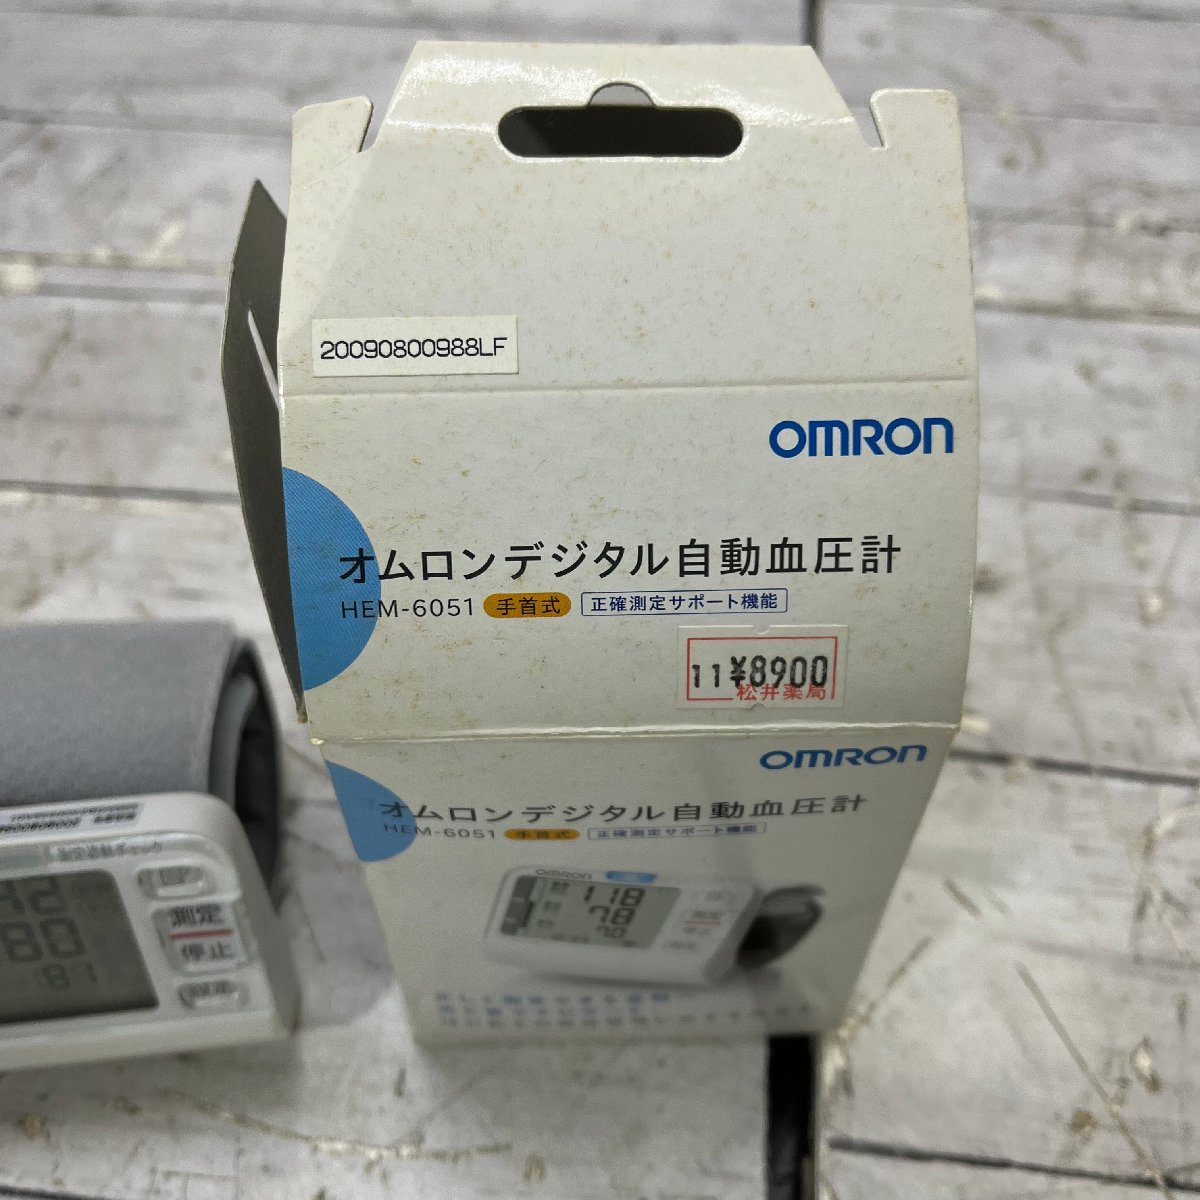 =M= OMRON Omron digital automatic hemadynamometer HEM-6051 wrist type accurate measurement support function =B-240108